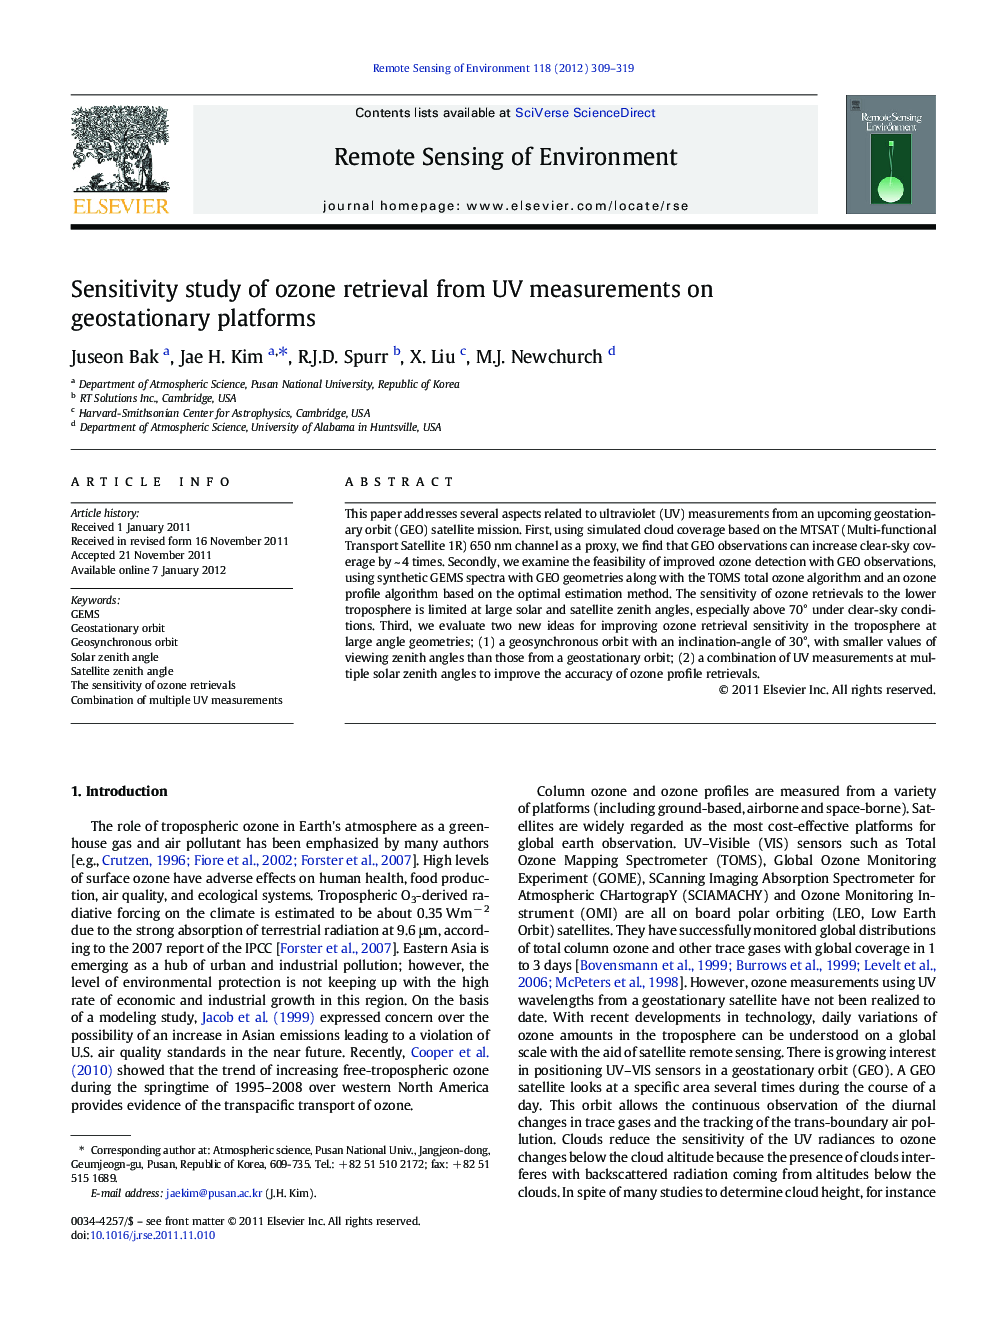 Sensitivity study of ozone retrieval from UV measurements on geostationary platforms